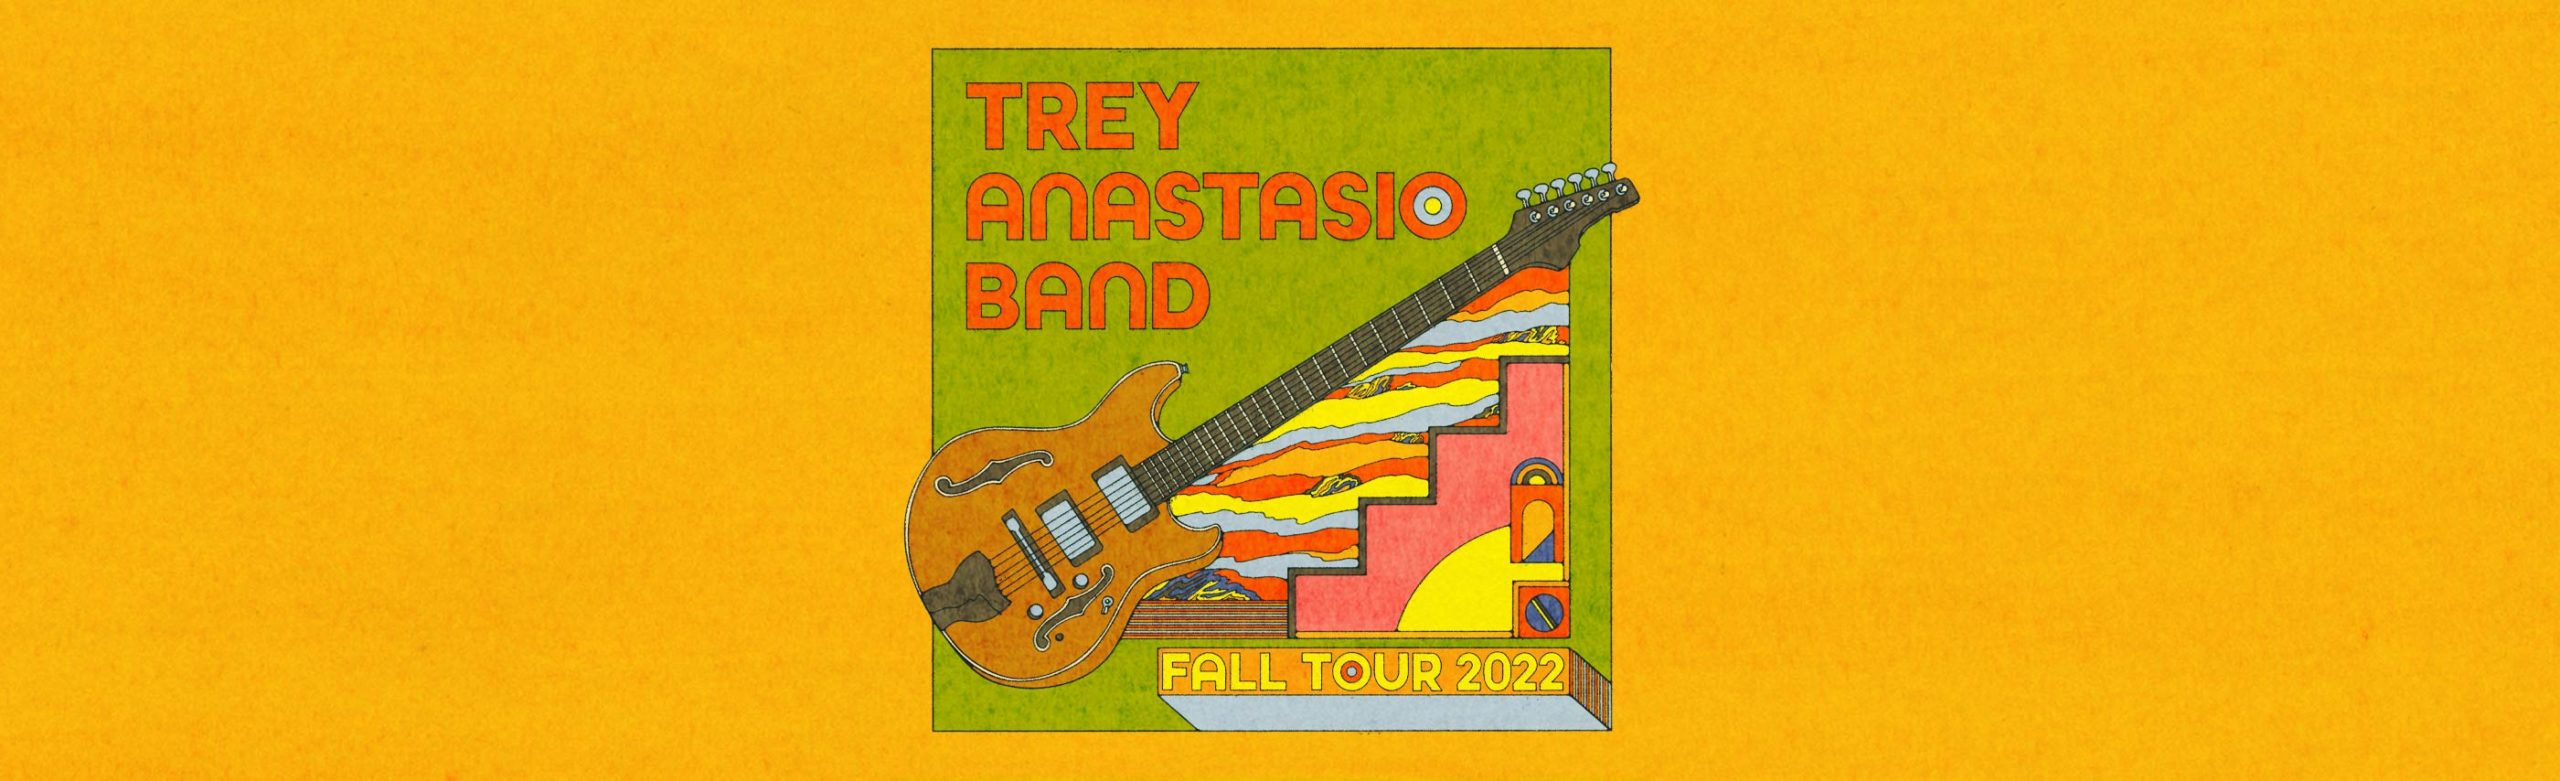 Trey Anastasio Band Confirms Concert at KettleHouse Amphitheater for Season Closer Image